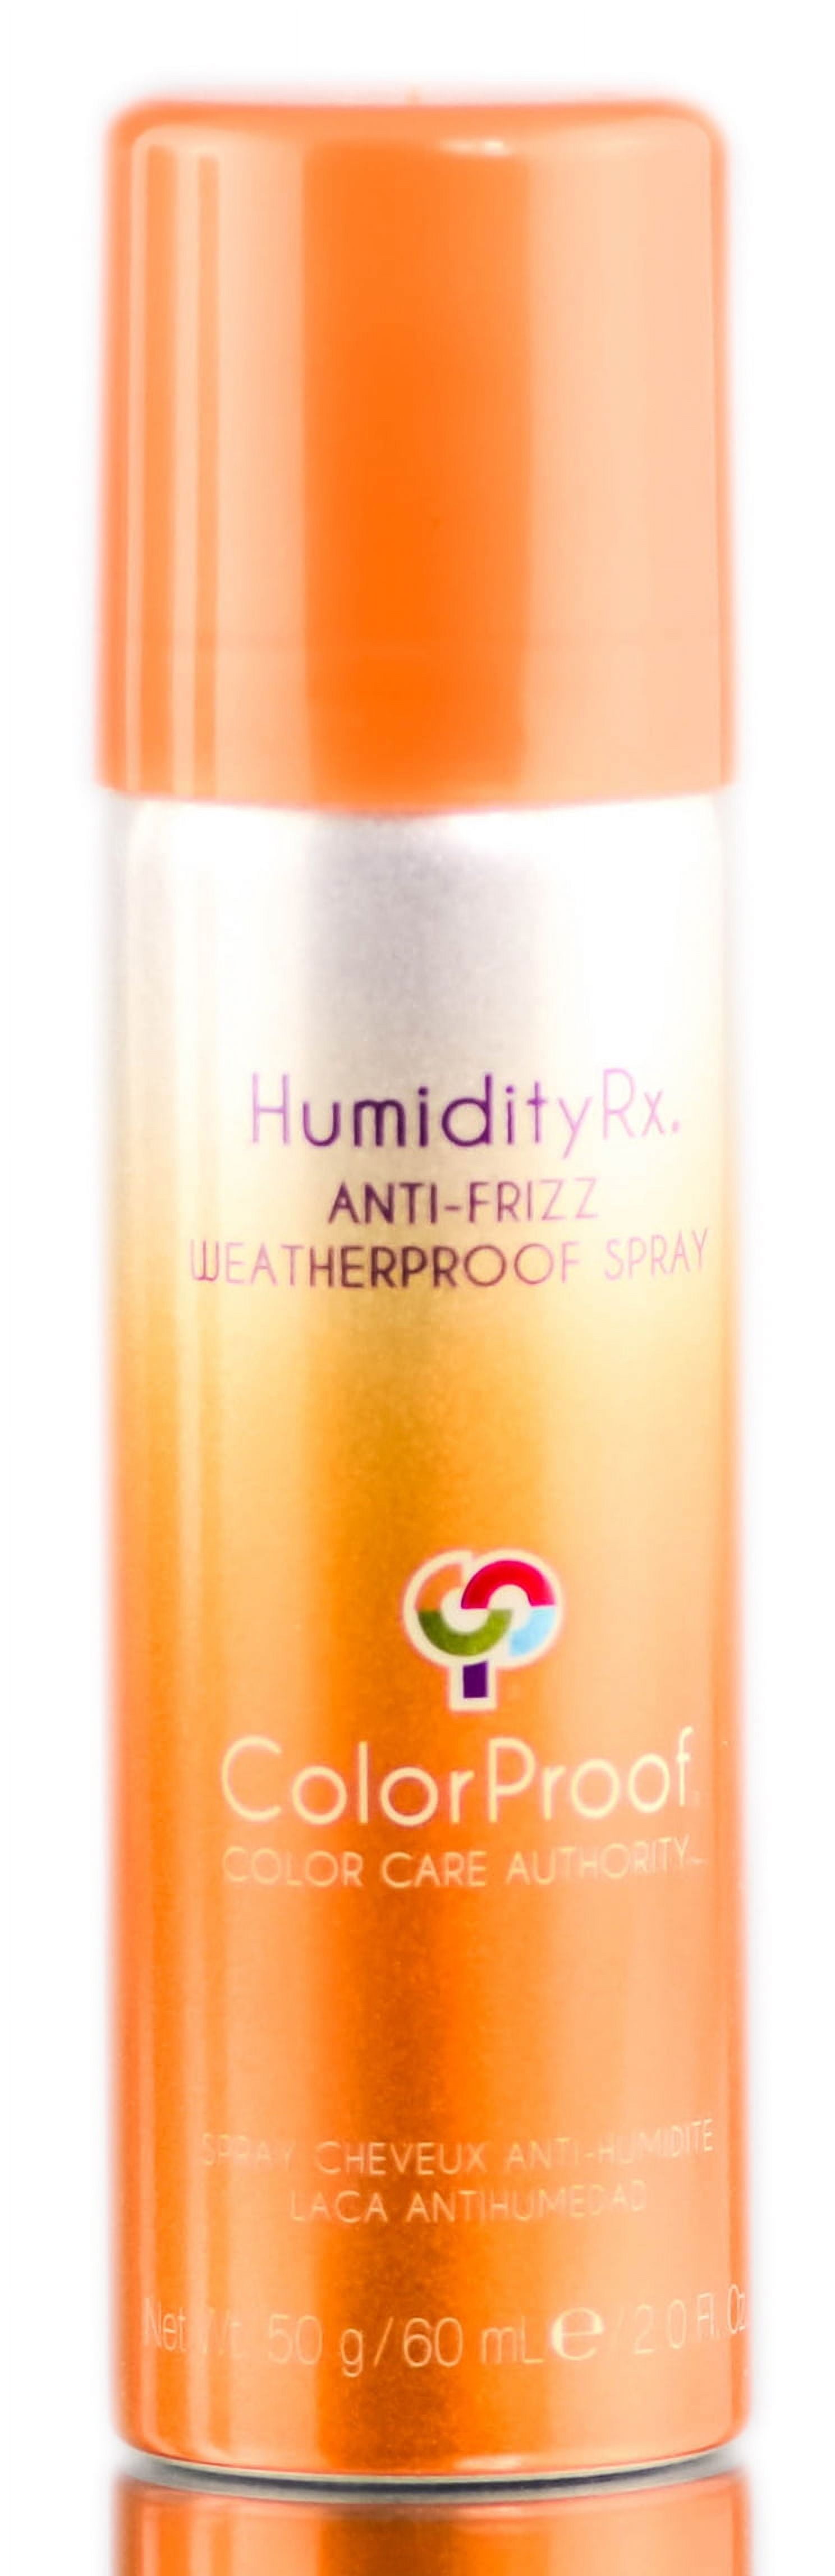 ColorProof Humidity Rx Anti-Frizz Weather Proof Spray (2 oz) 